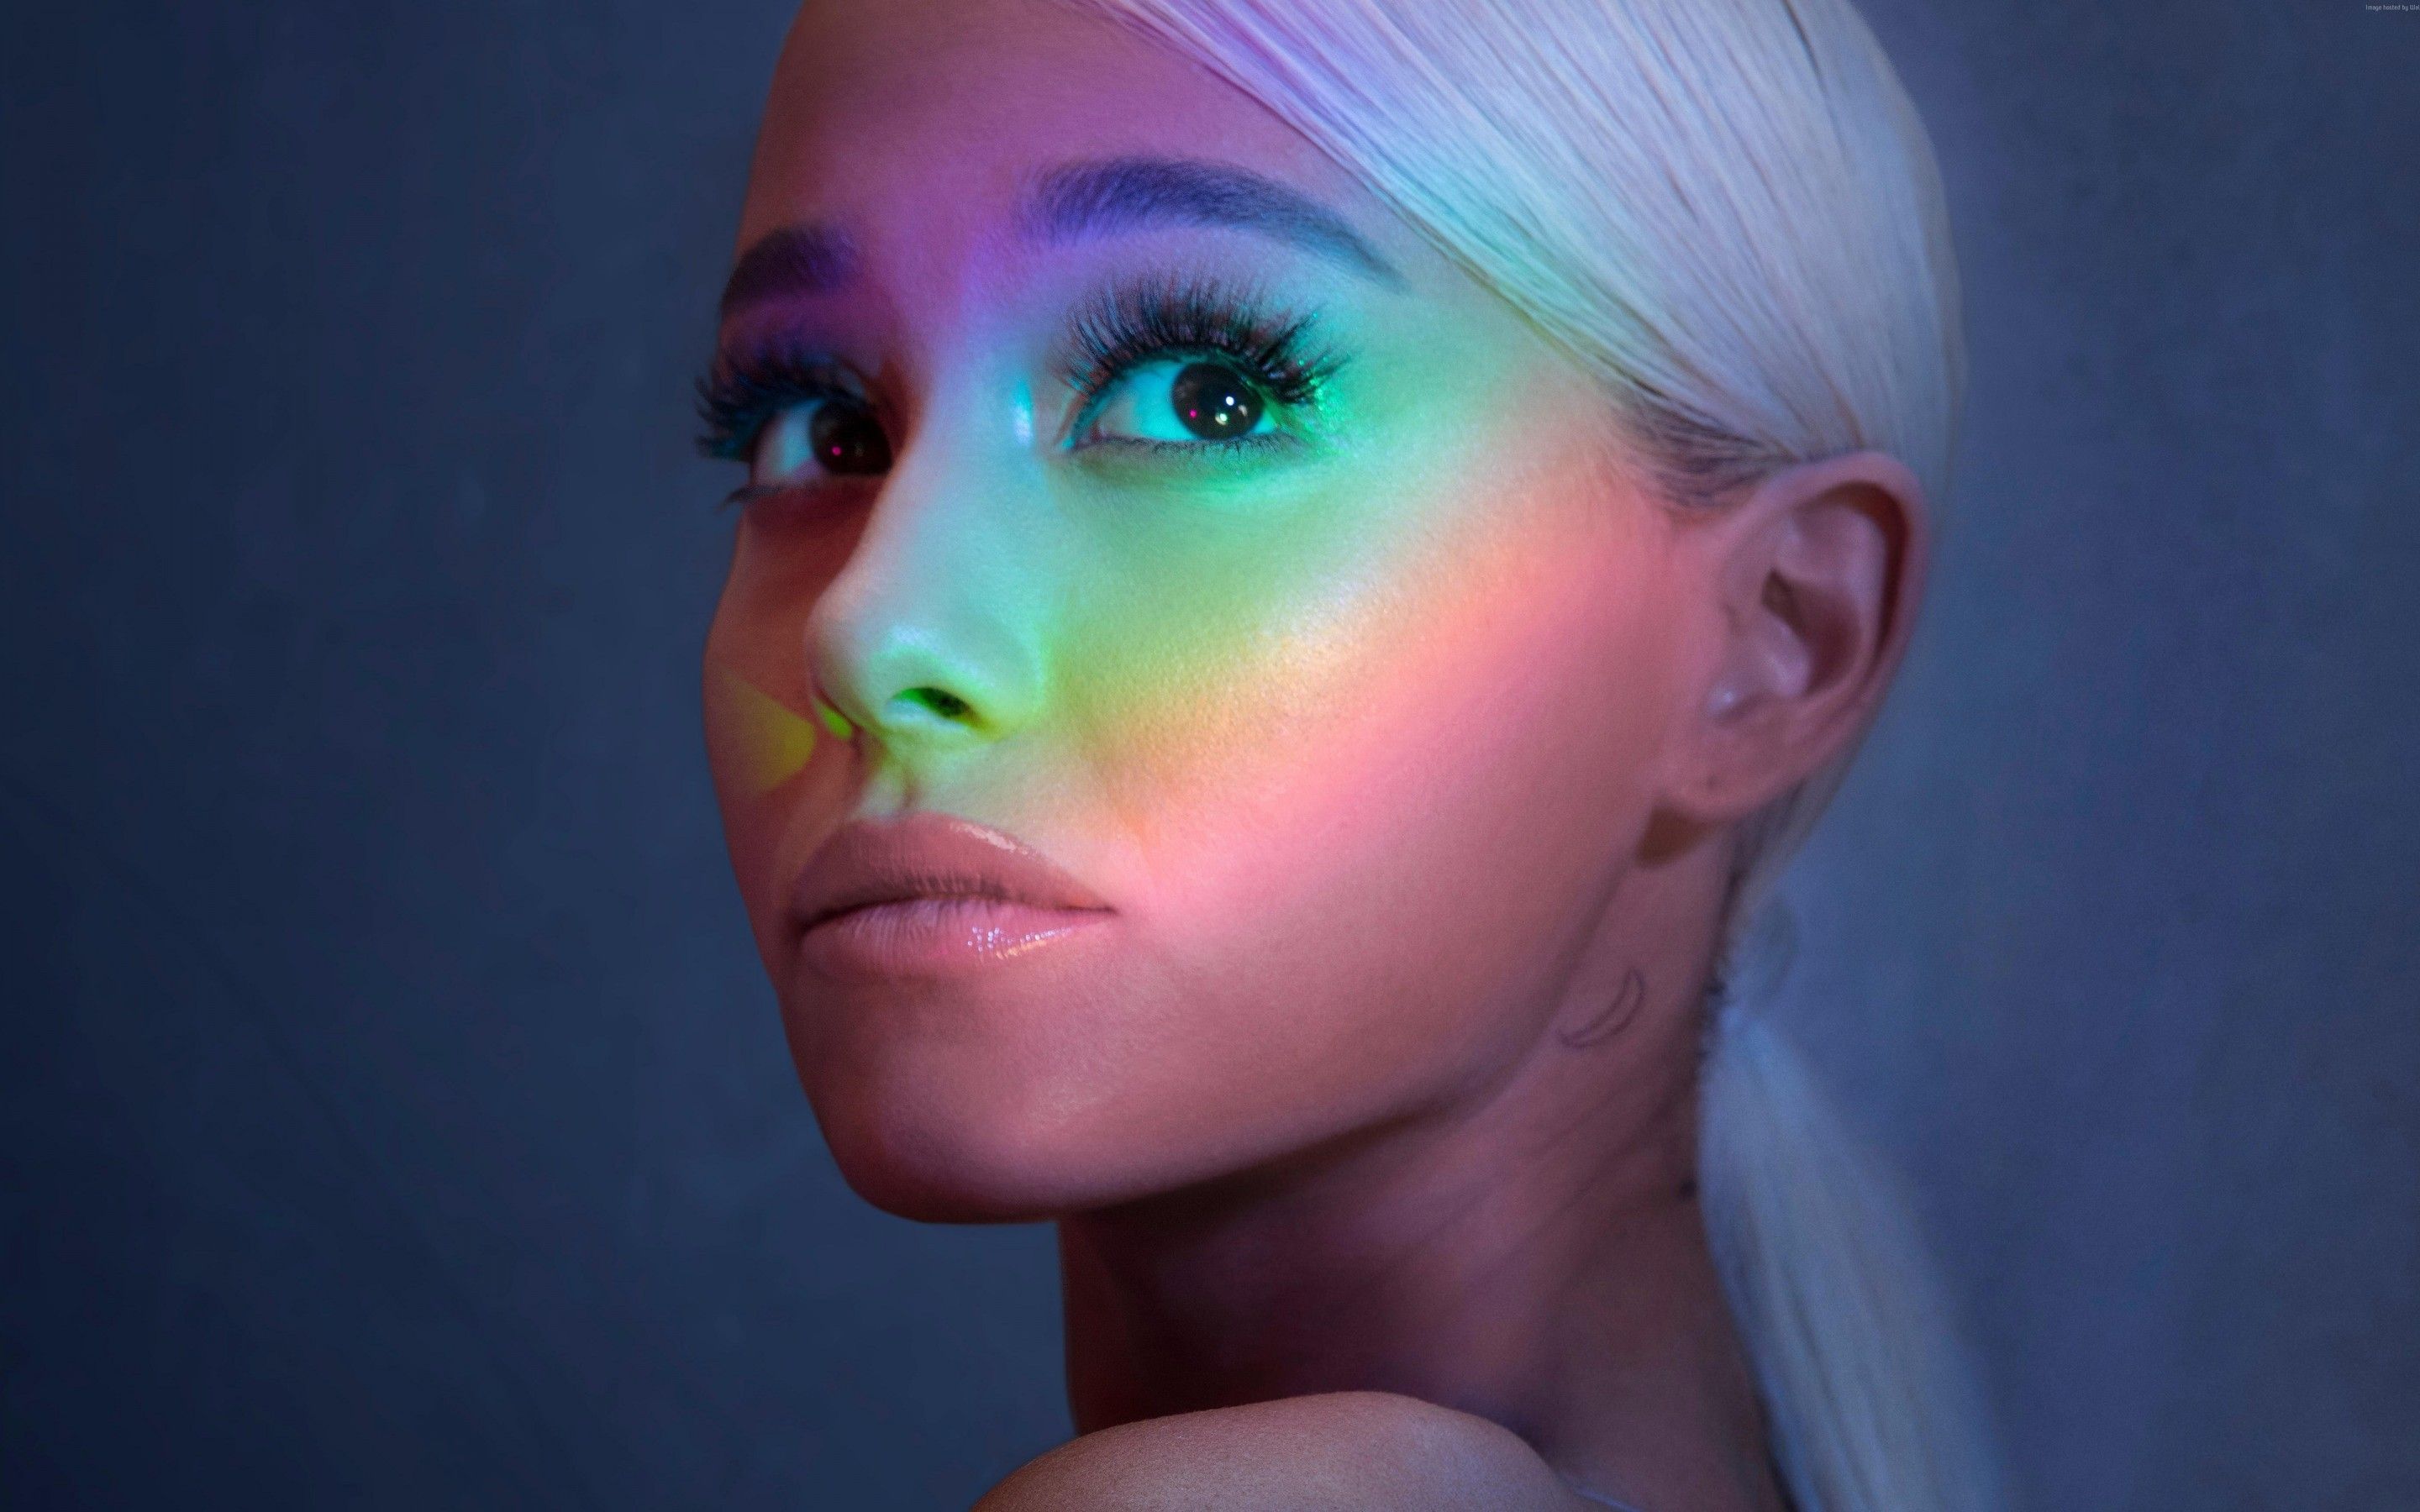 Download 2880x1800 Ariana Grande, Singer, Close Up Wallpaper